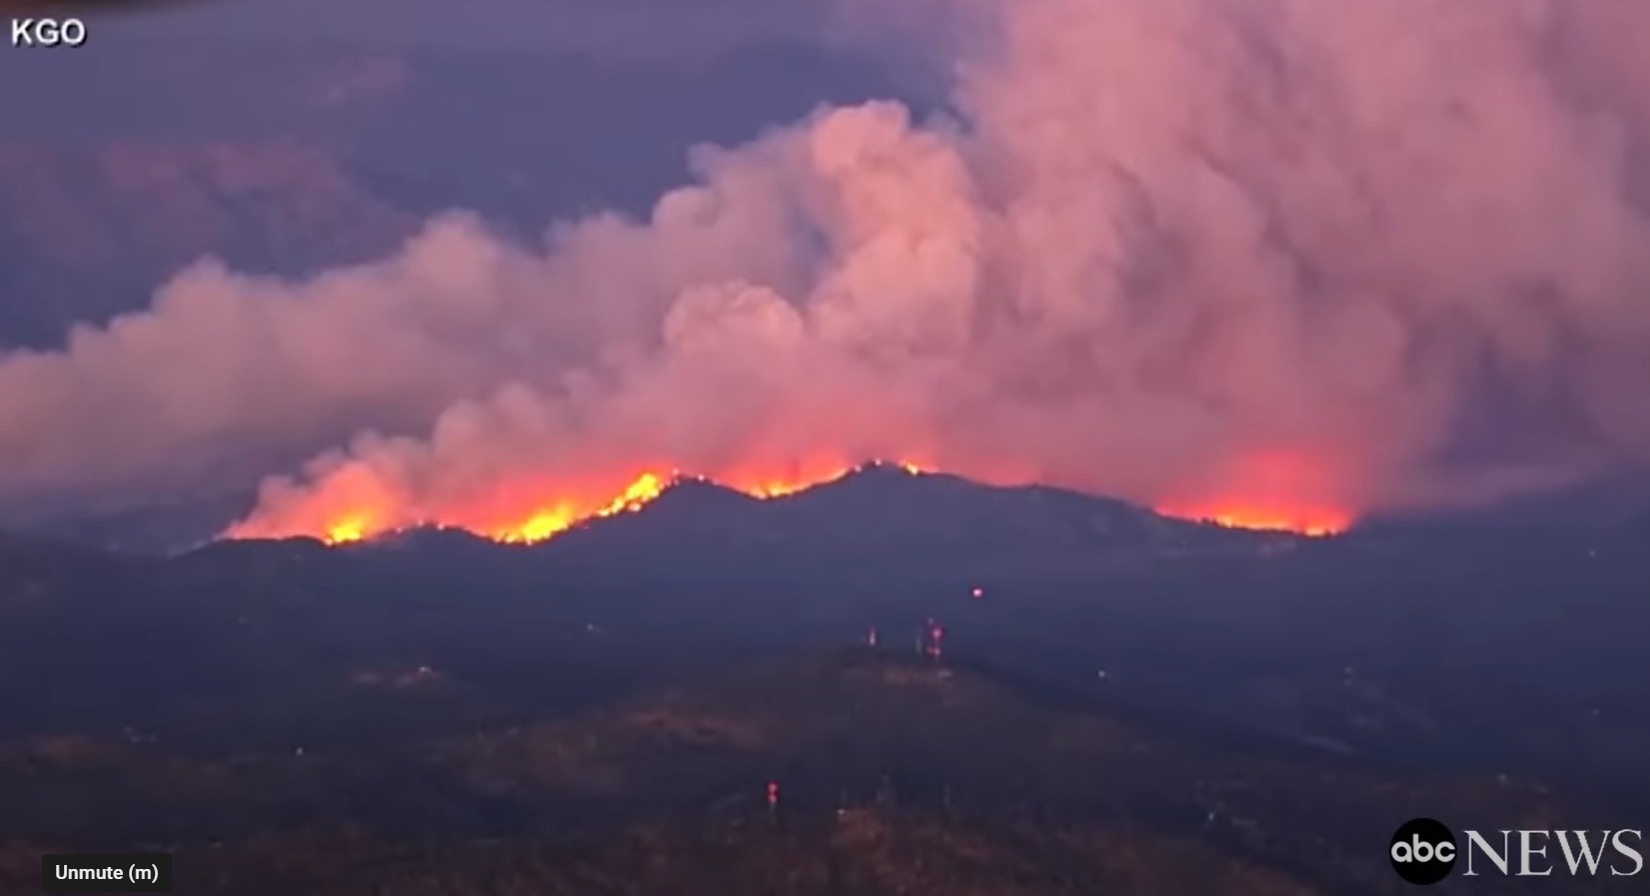 Oak Fire spreads over 6,500 acres in California